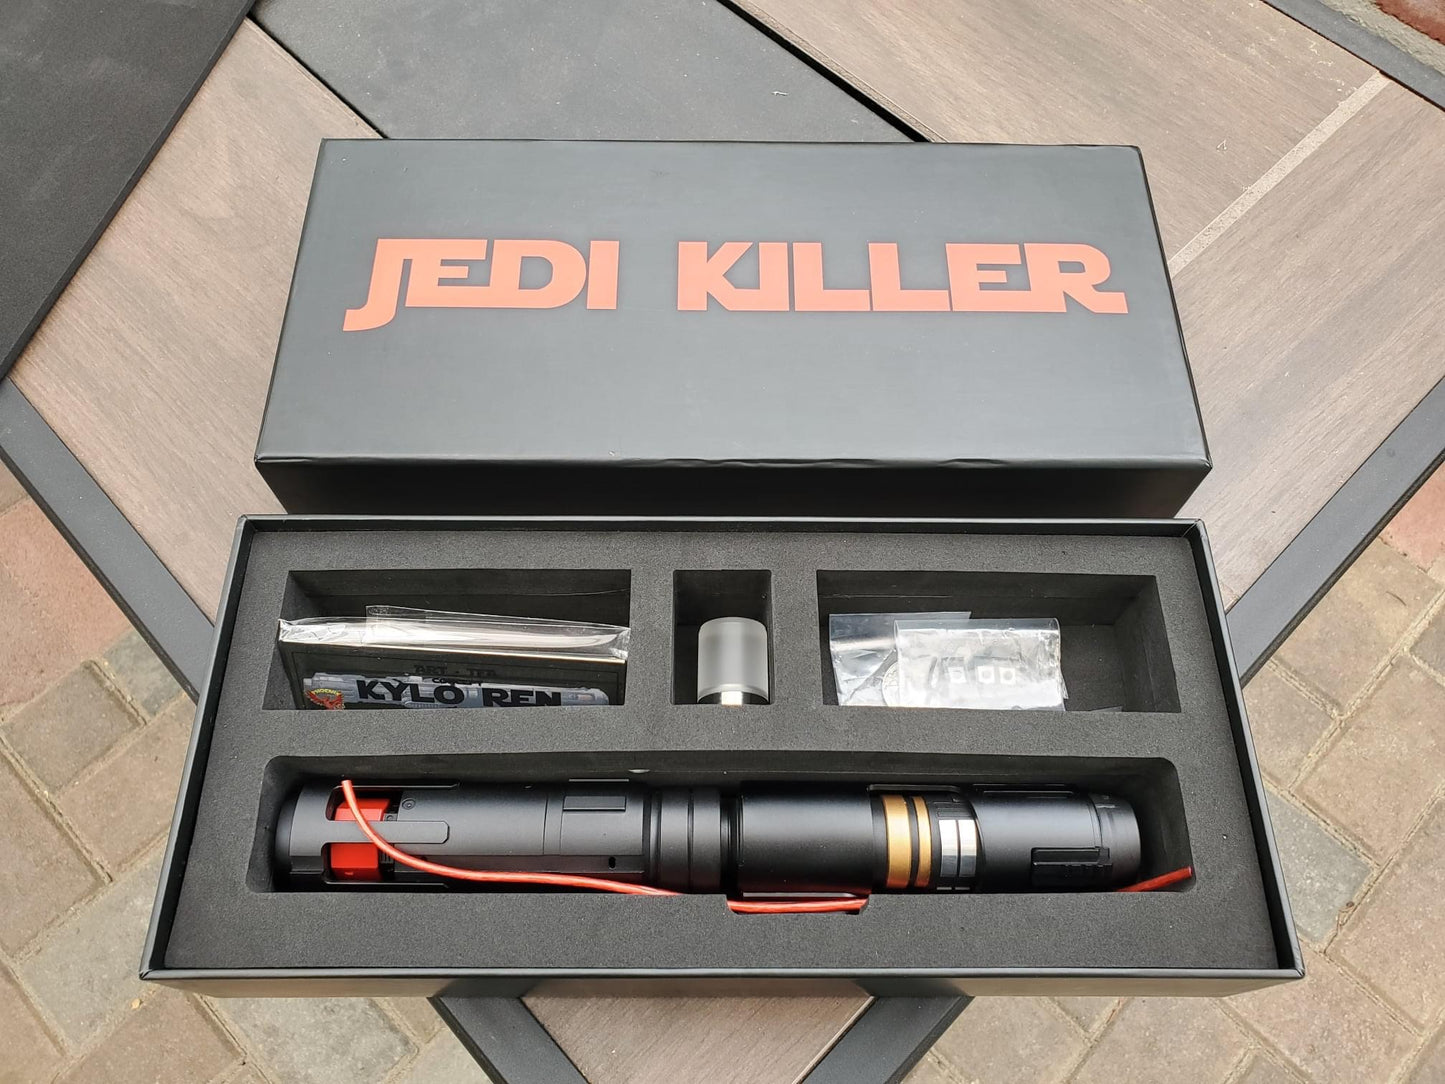 Jedi Killer - Gen1